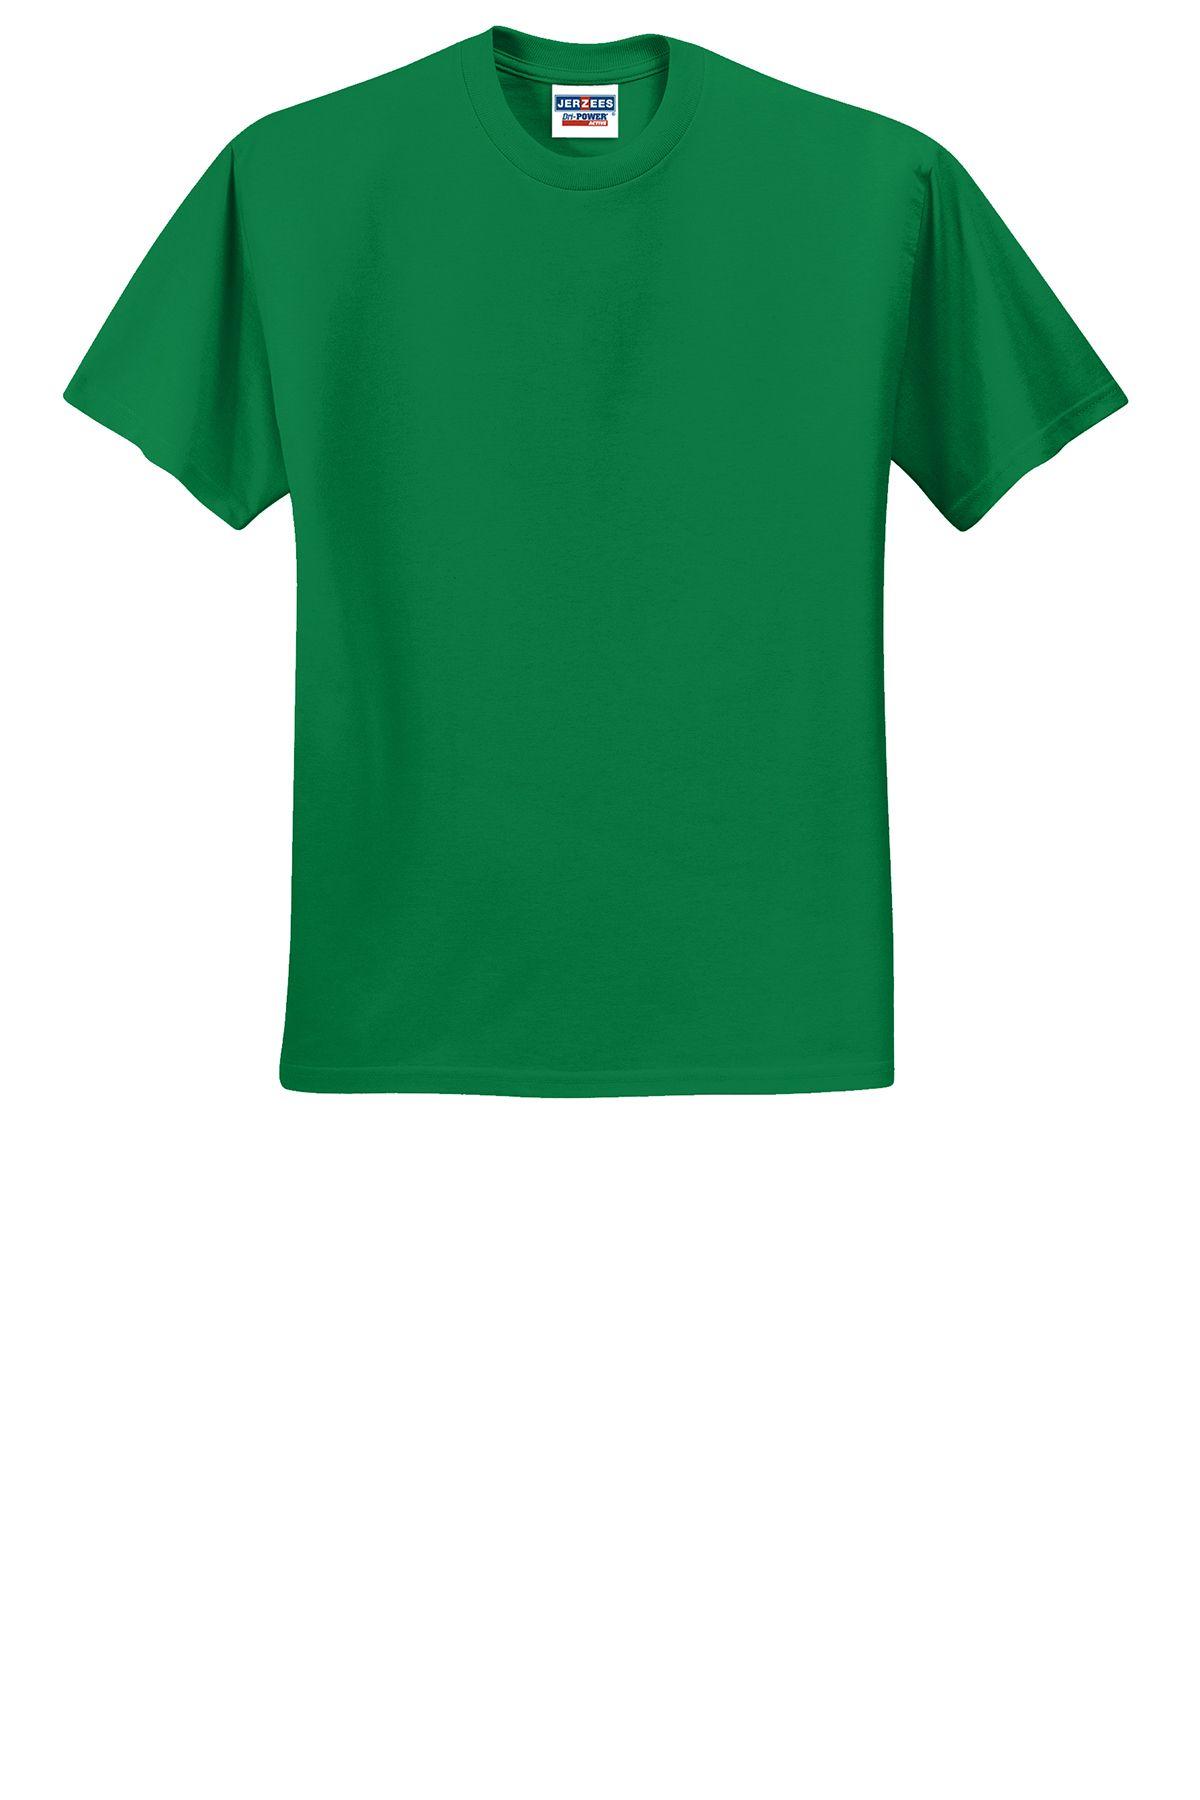 Jerzees Logo - JERZEES® - Dri-Power® Active 50/50 Cotton/Poly T-Shirt | 50/50 Blend ...